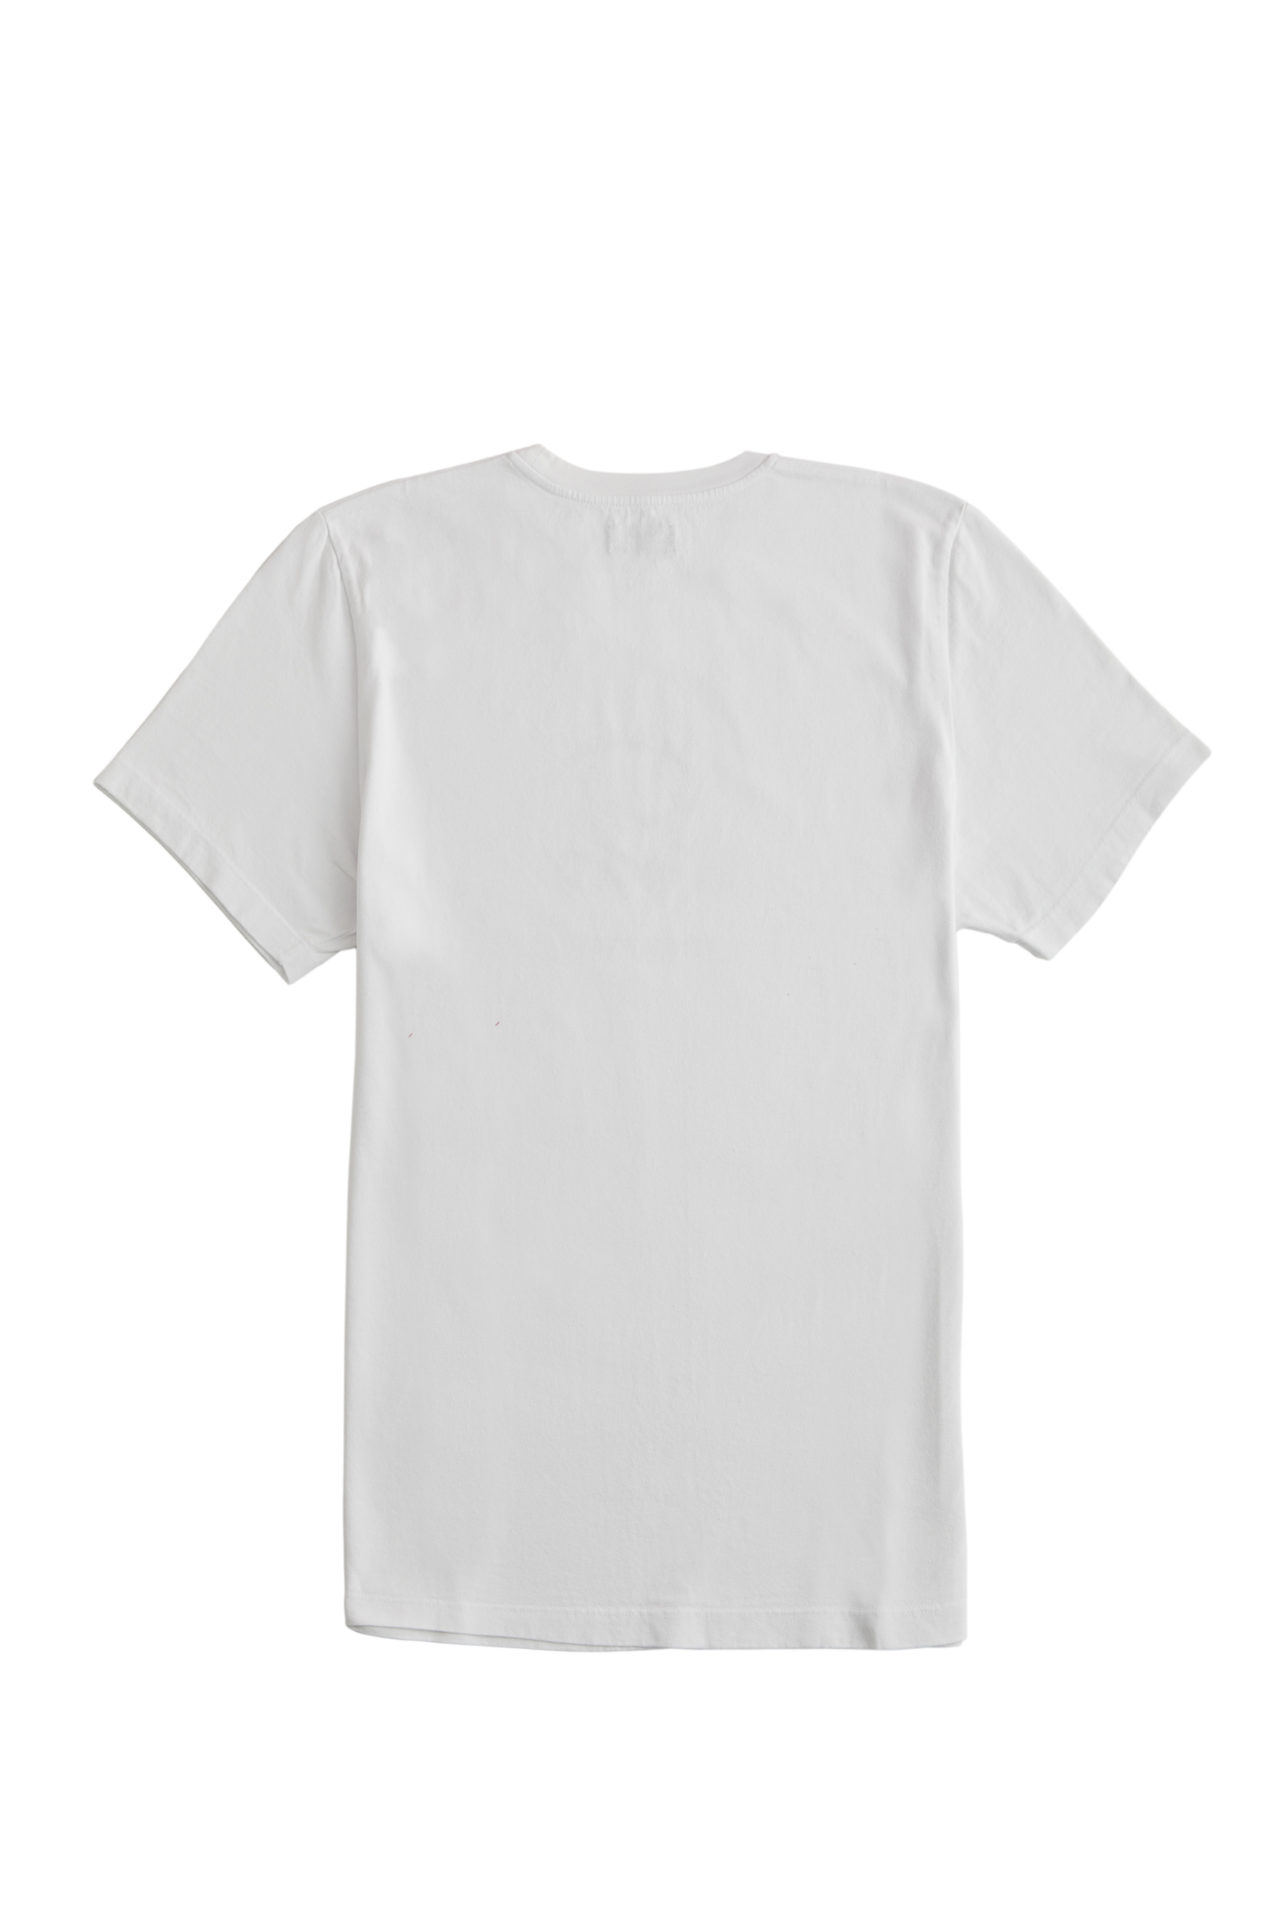 Plain White Raw Cotton T-Shirt -